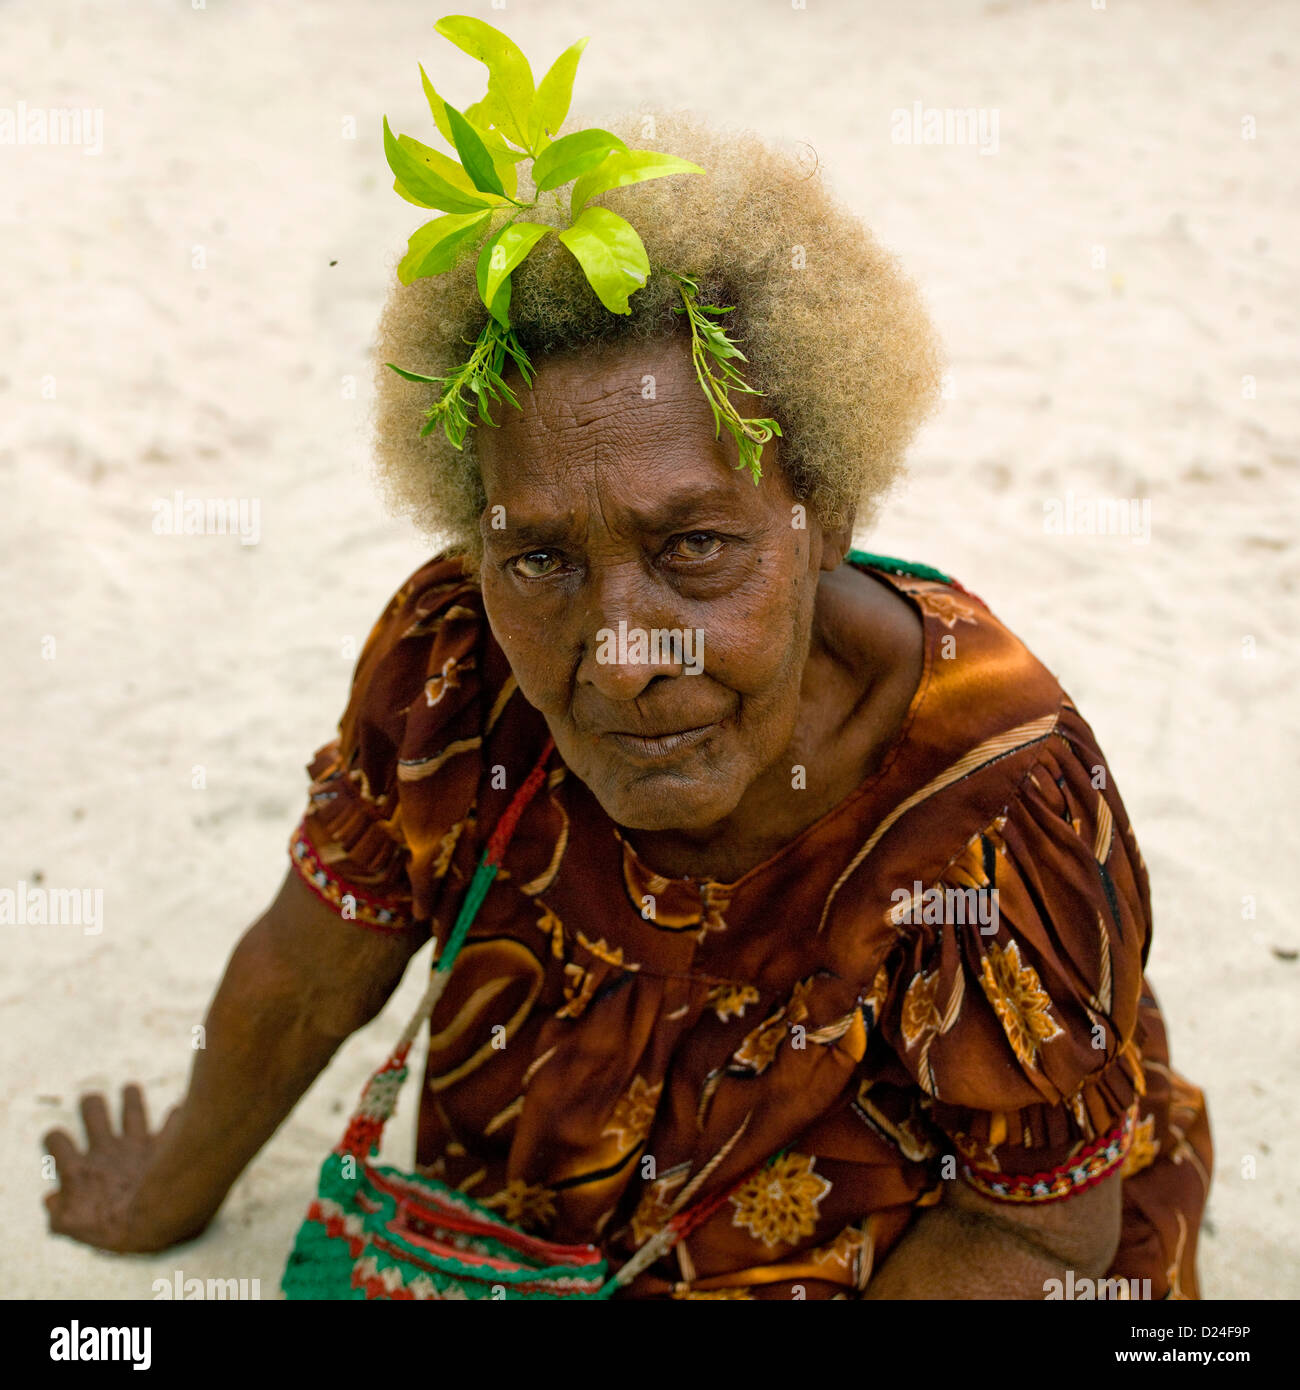 Alte Frau mit blonden Haaren, neue Irland Island Kavieng, Papua Neu Guinea Stockfoto